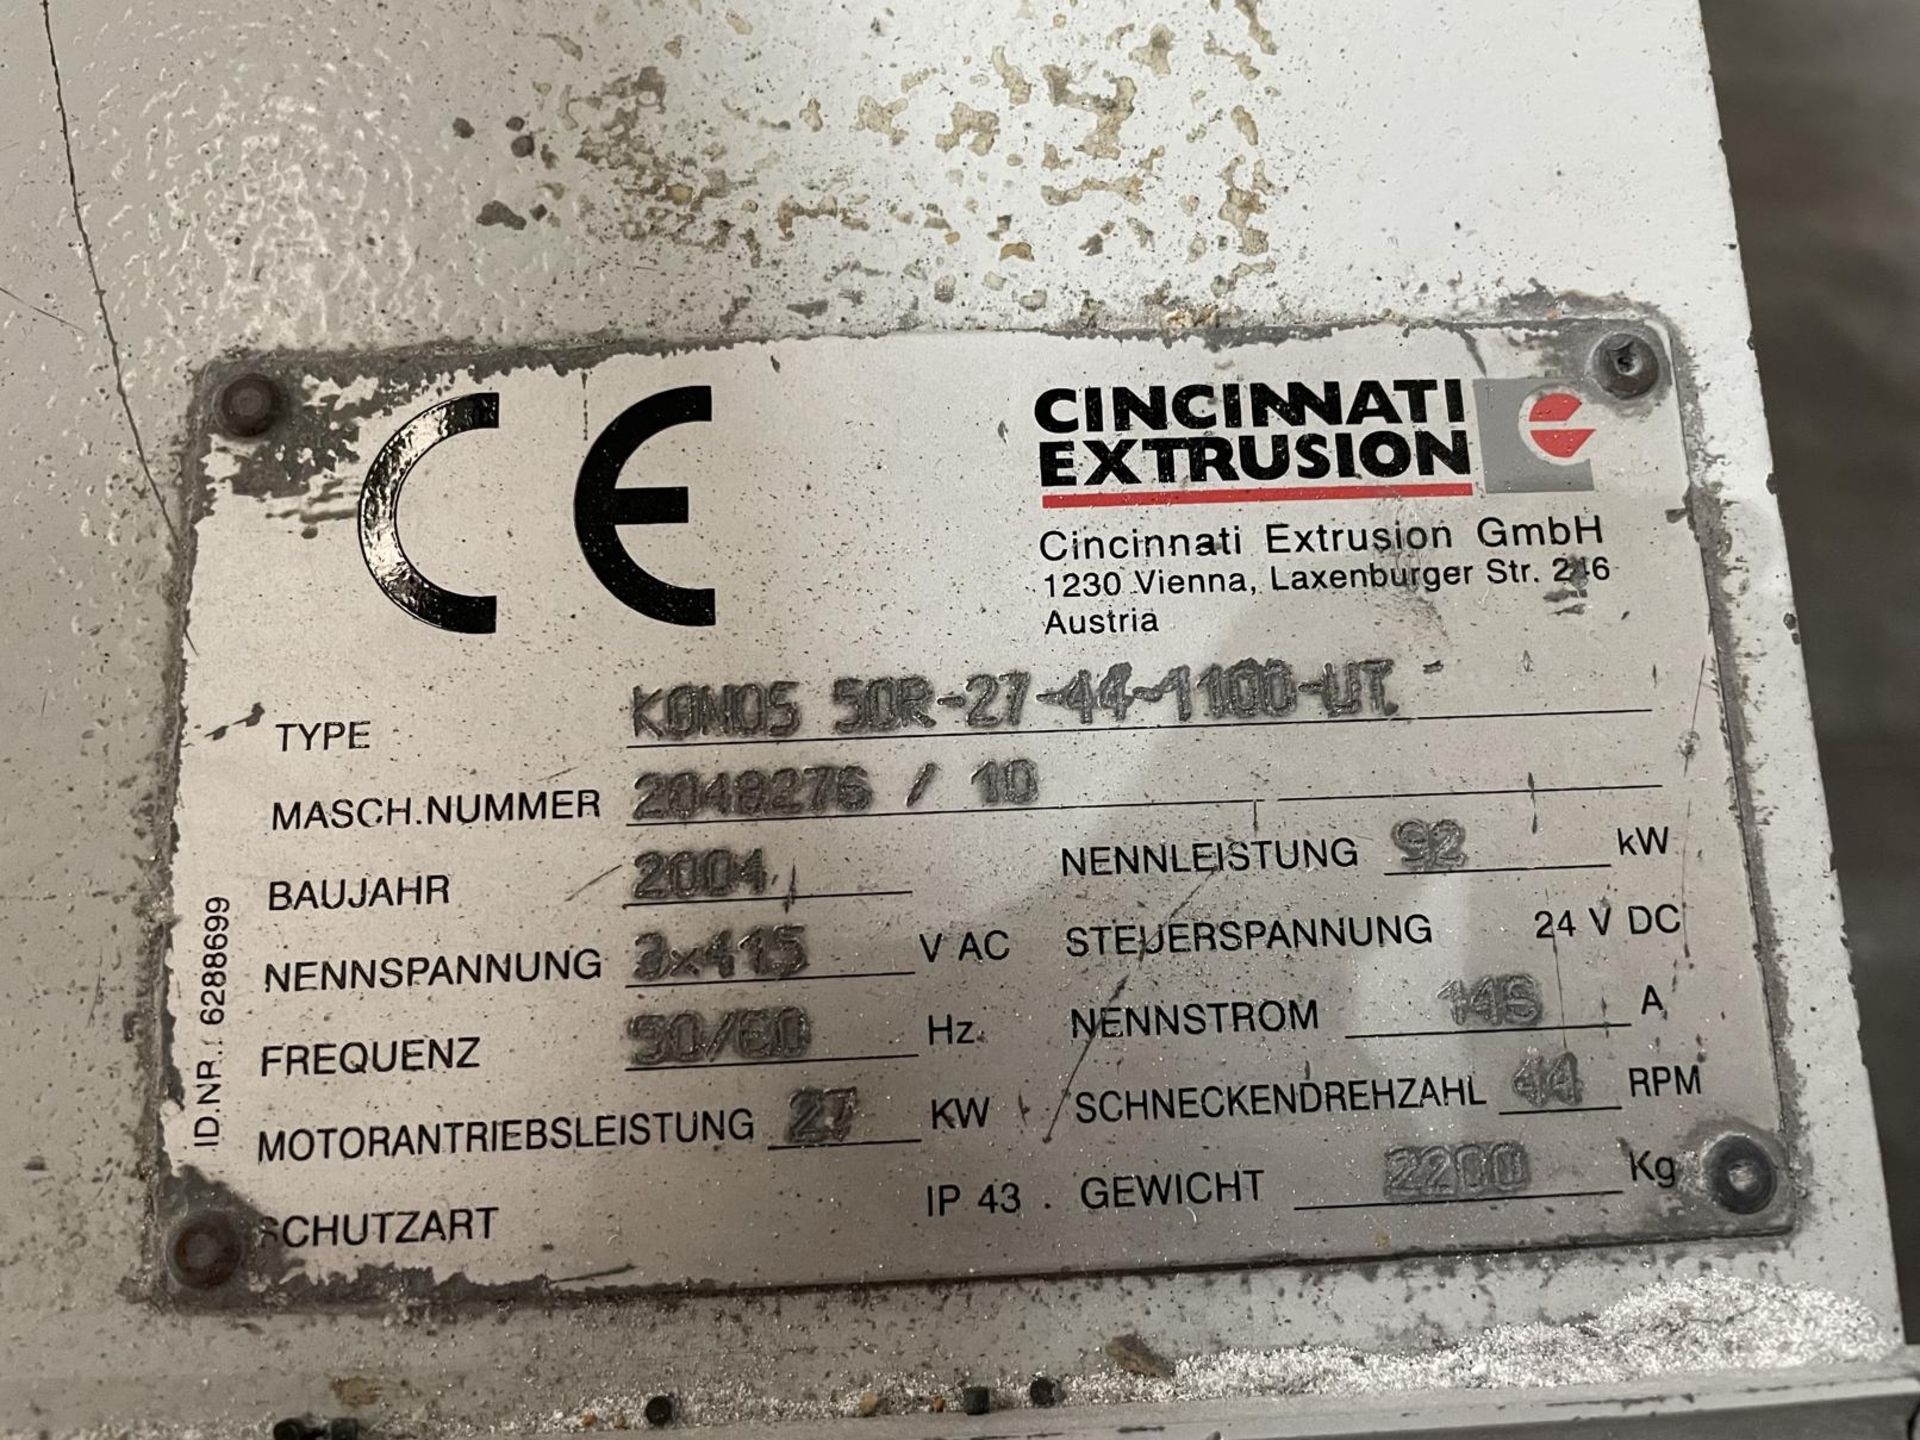 Cincinnati KONOS 50R-27-44-1100-HT Plastic Extrusion Machine With Cincinnati Exc Pro-XP ControlsSe - Image 4 of 6